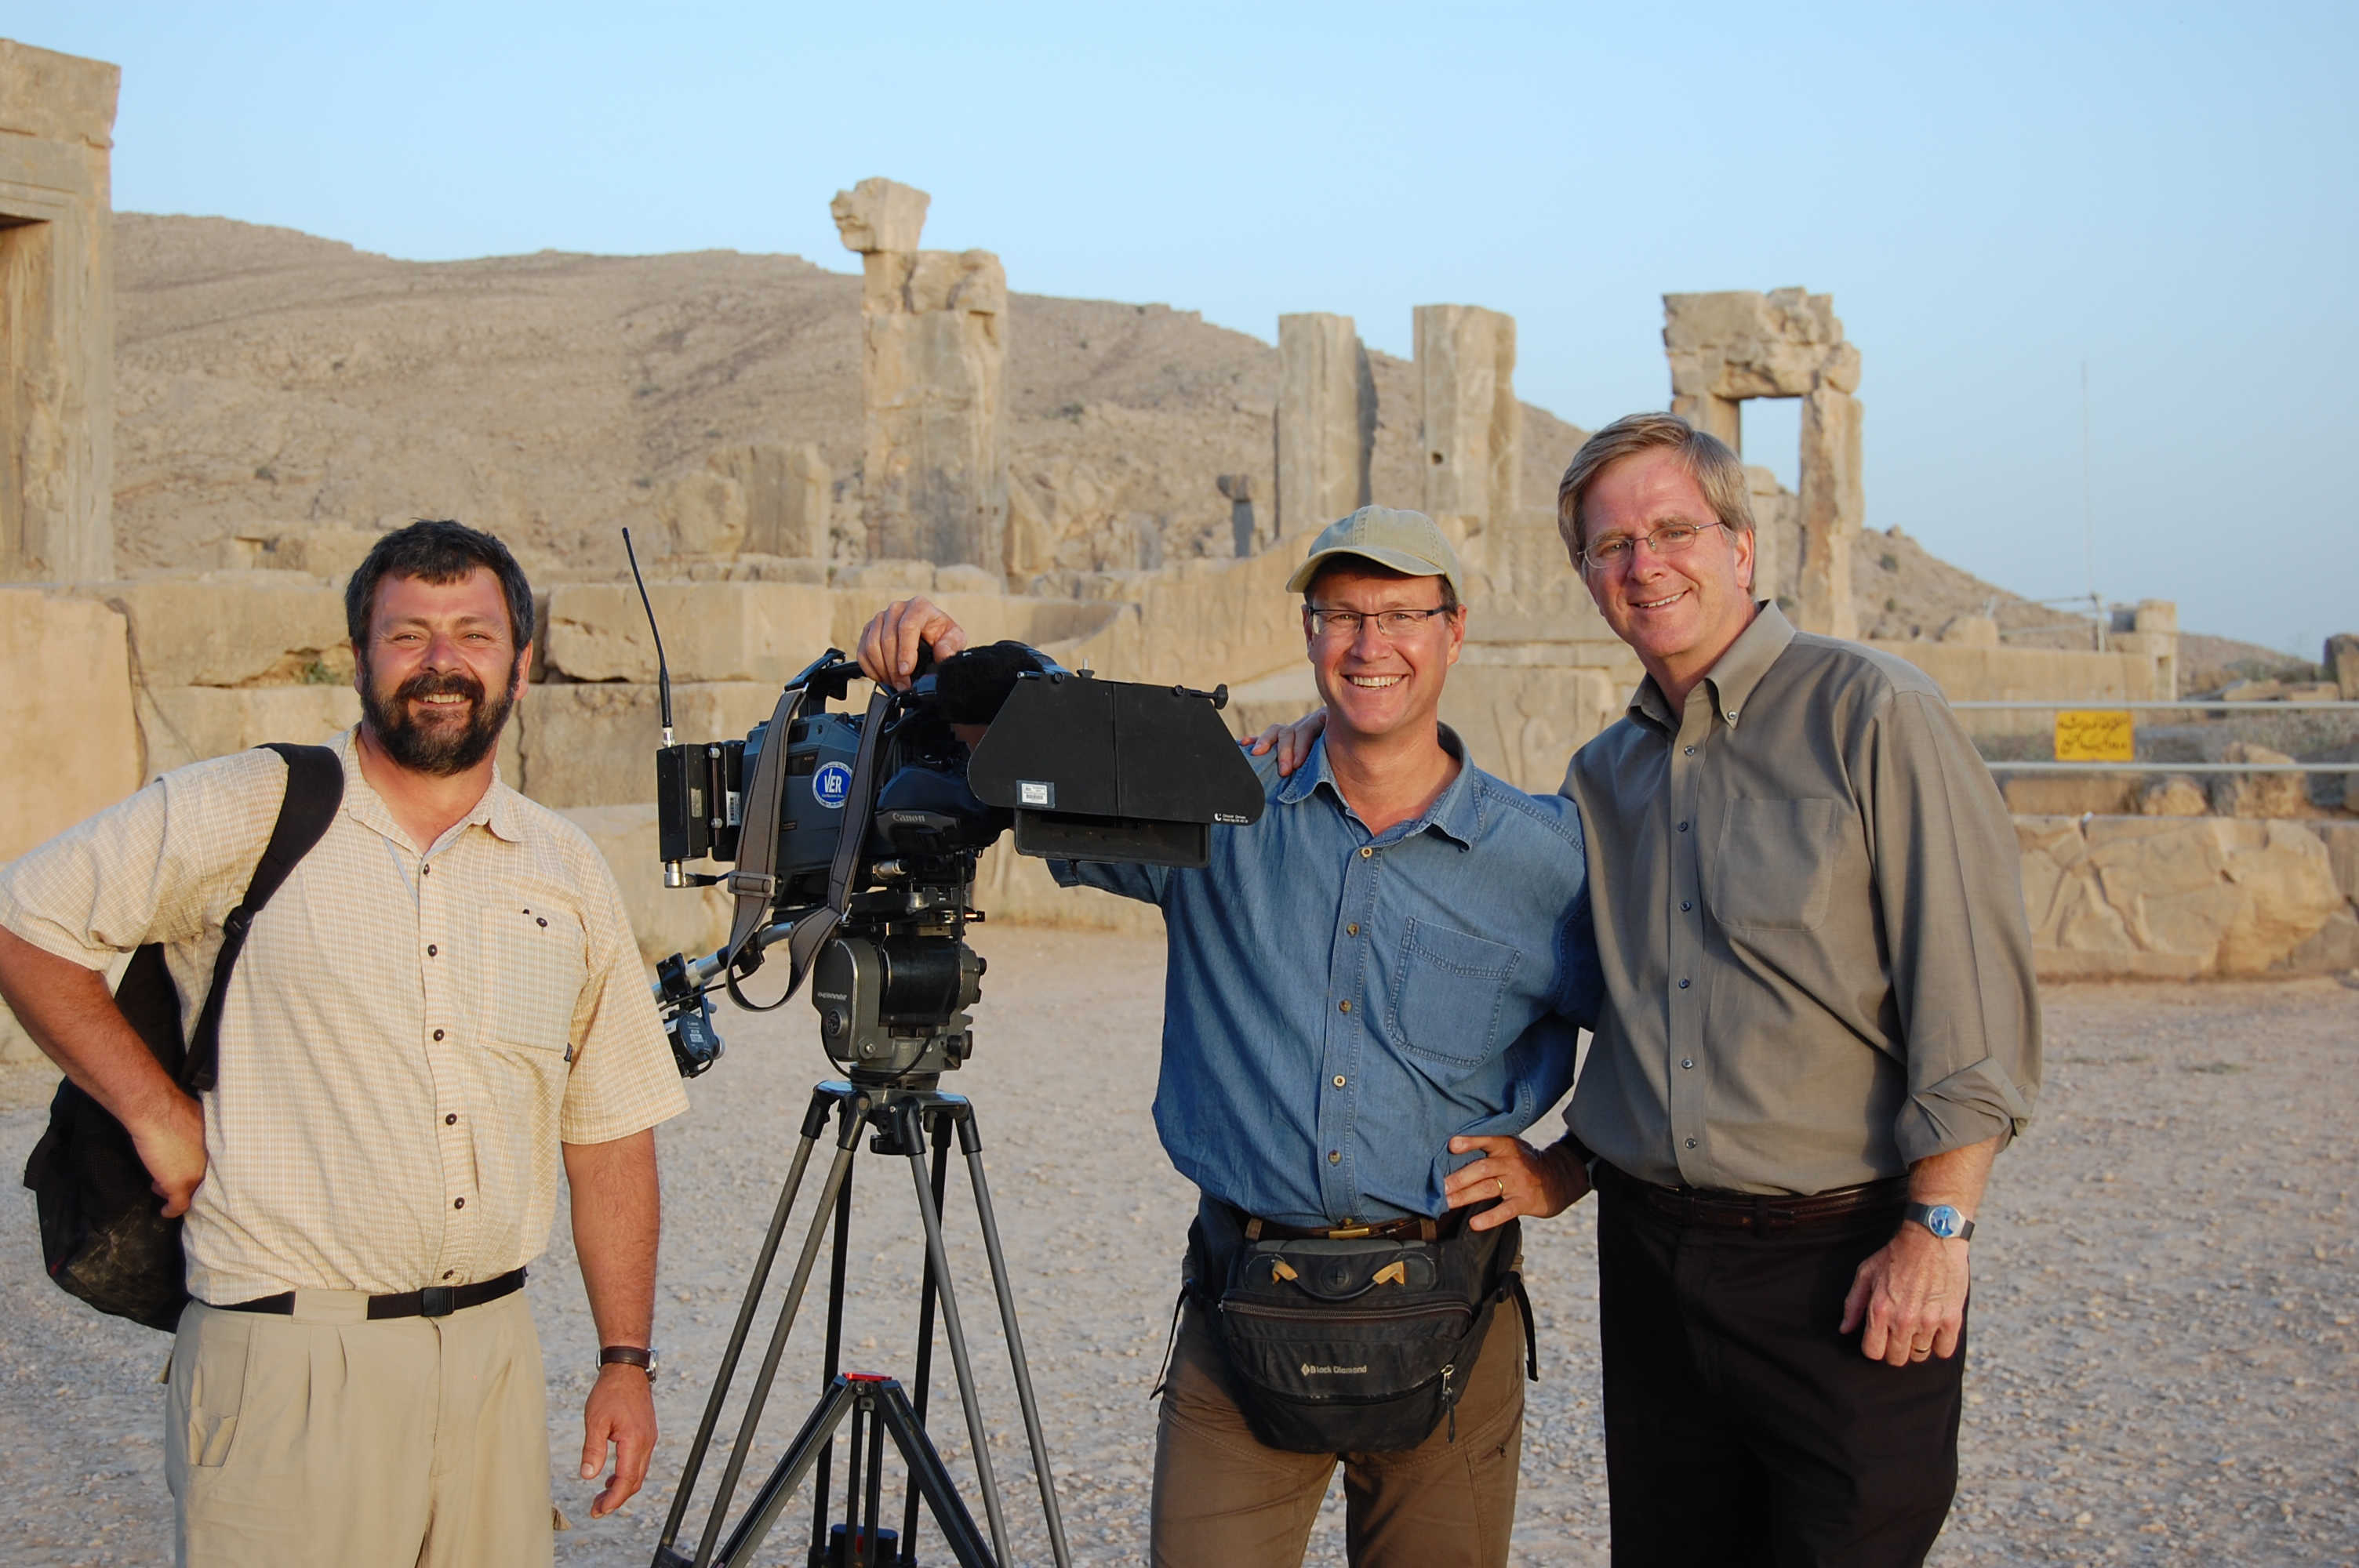 Filming on location in Persepolis